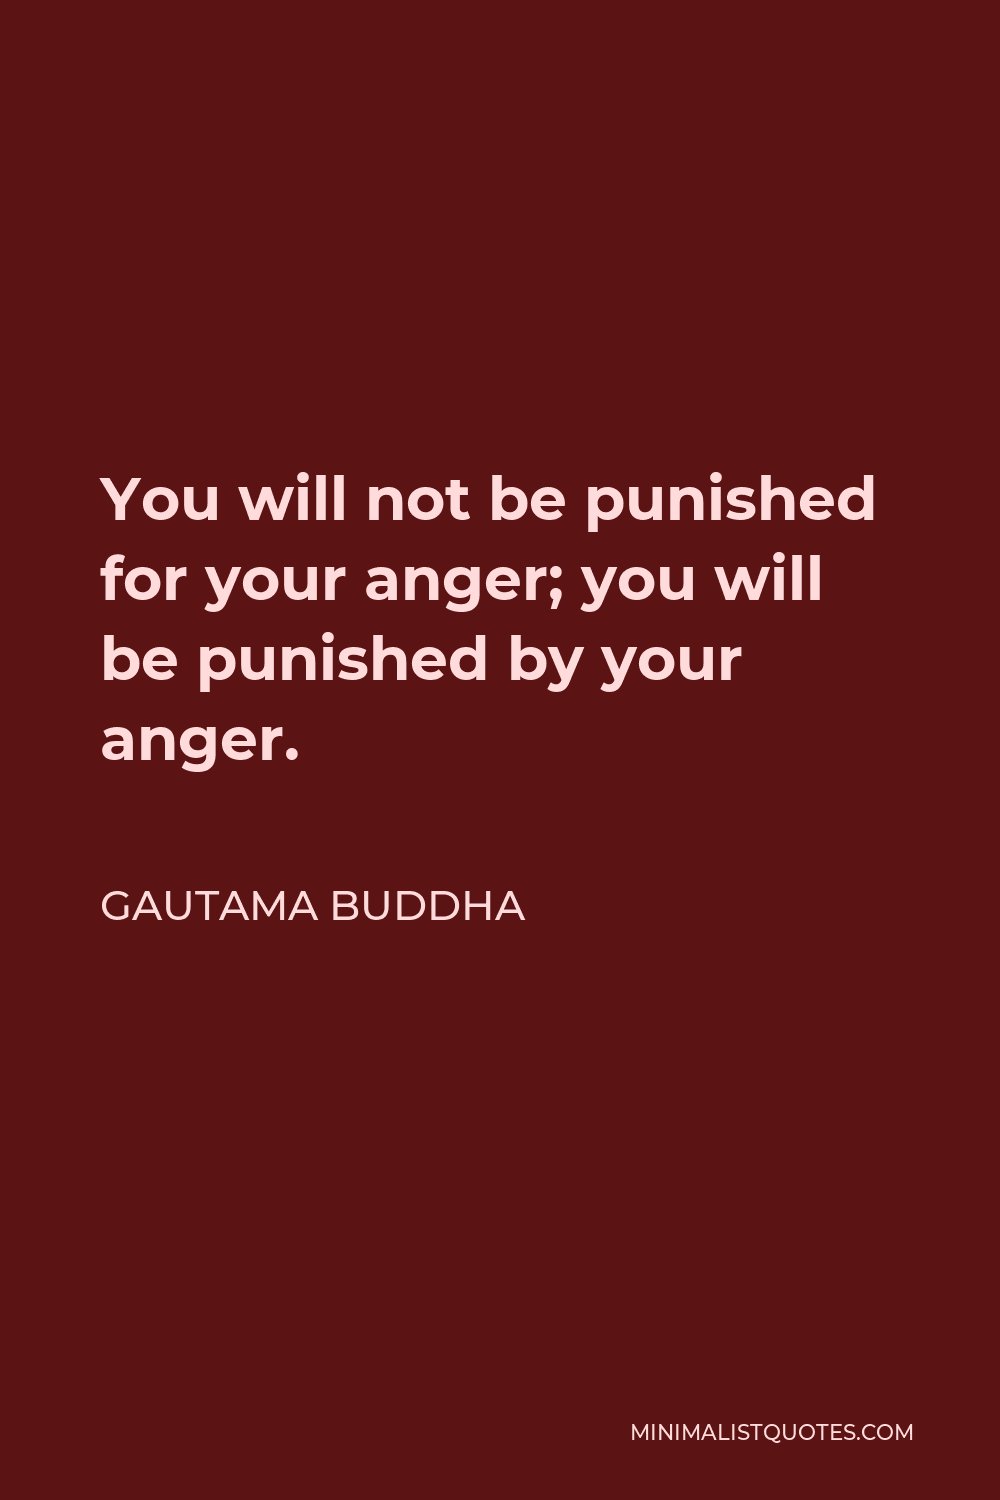 Gautama Buddha Quote - You will not be punished for your anger; you will be punished by your anger.